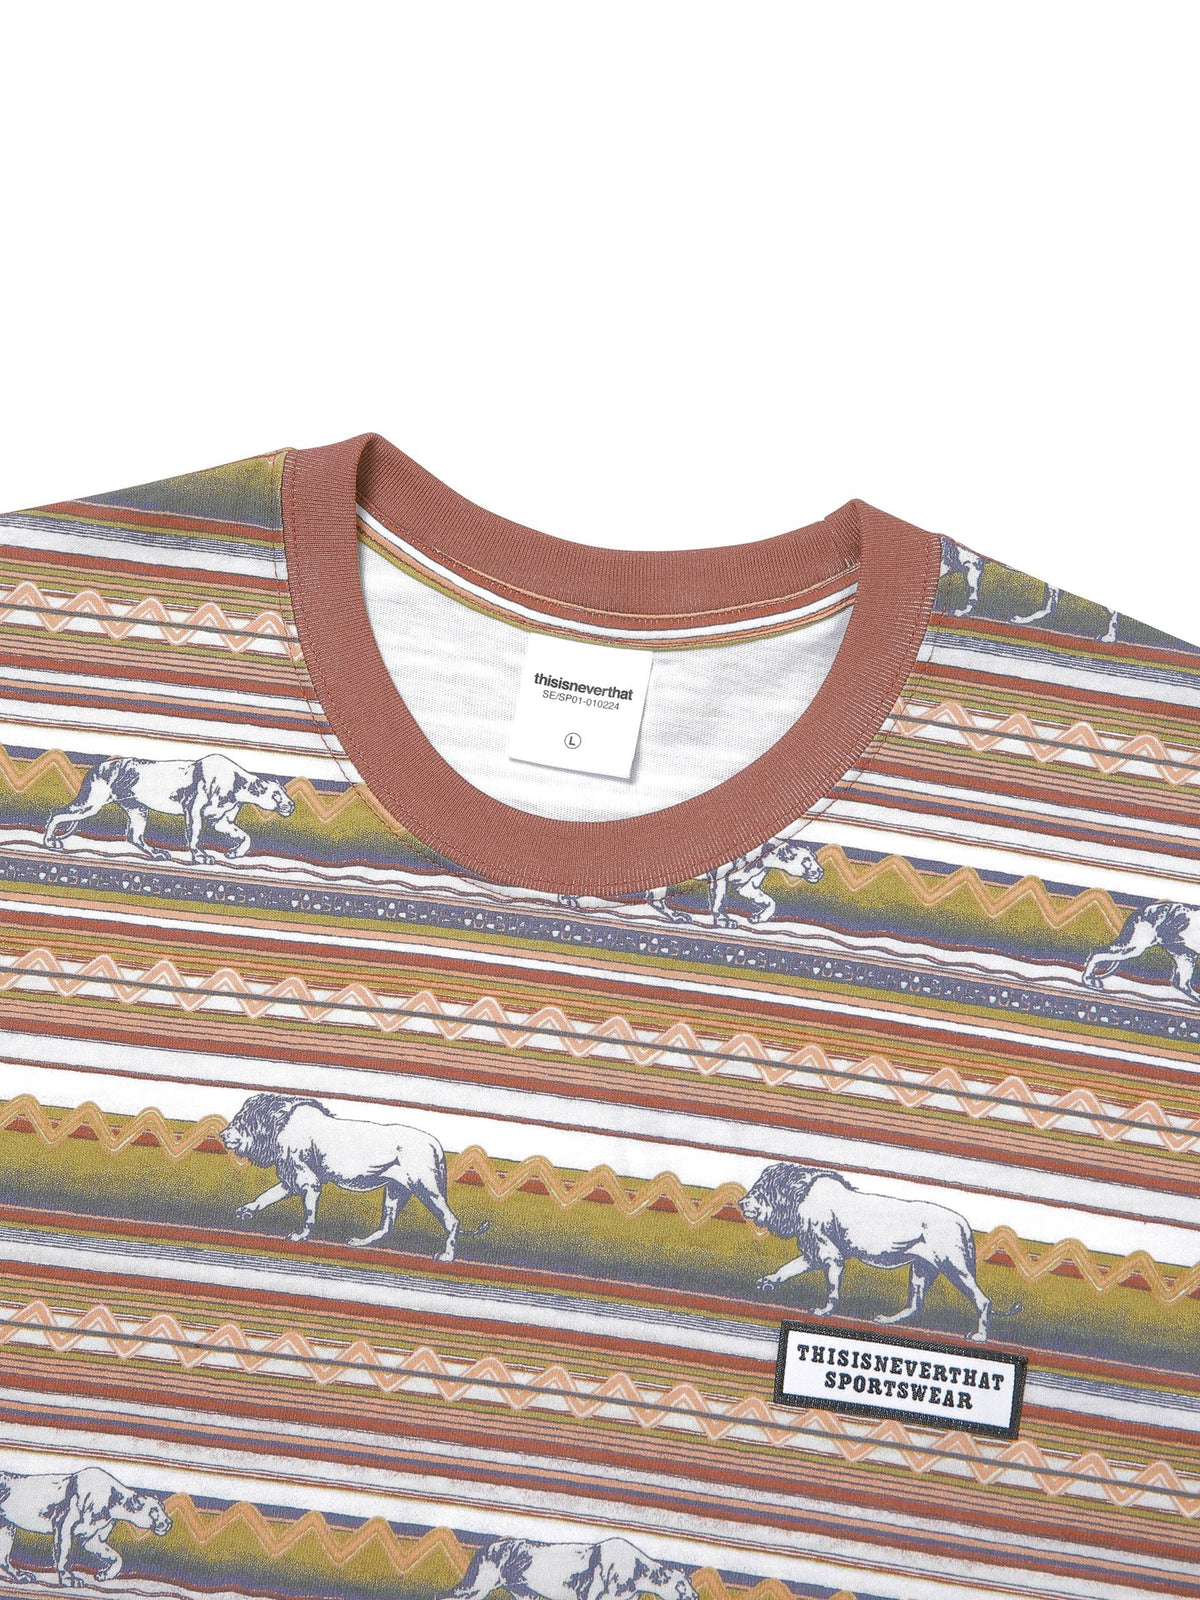 Printed LION Stripe Tee T-Shirt 